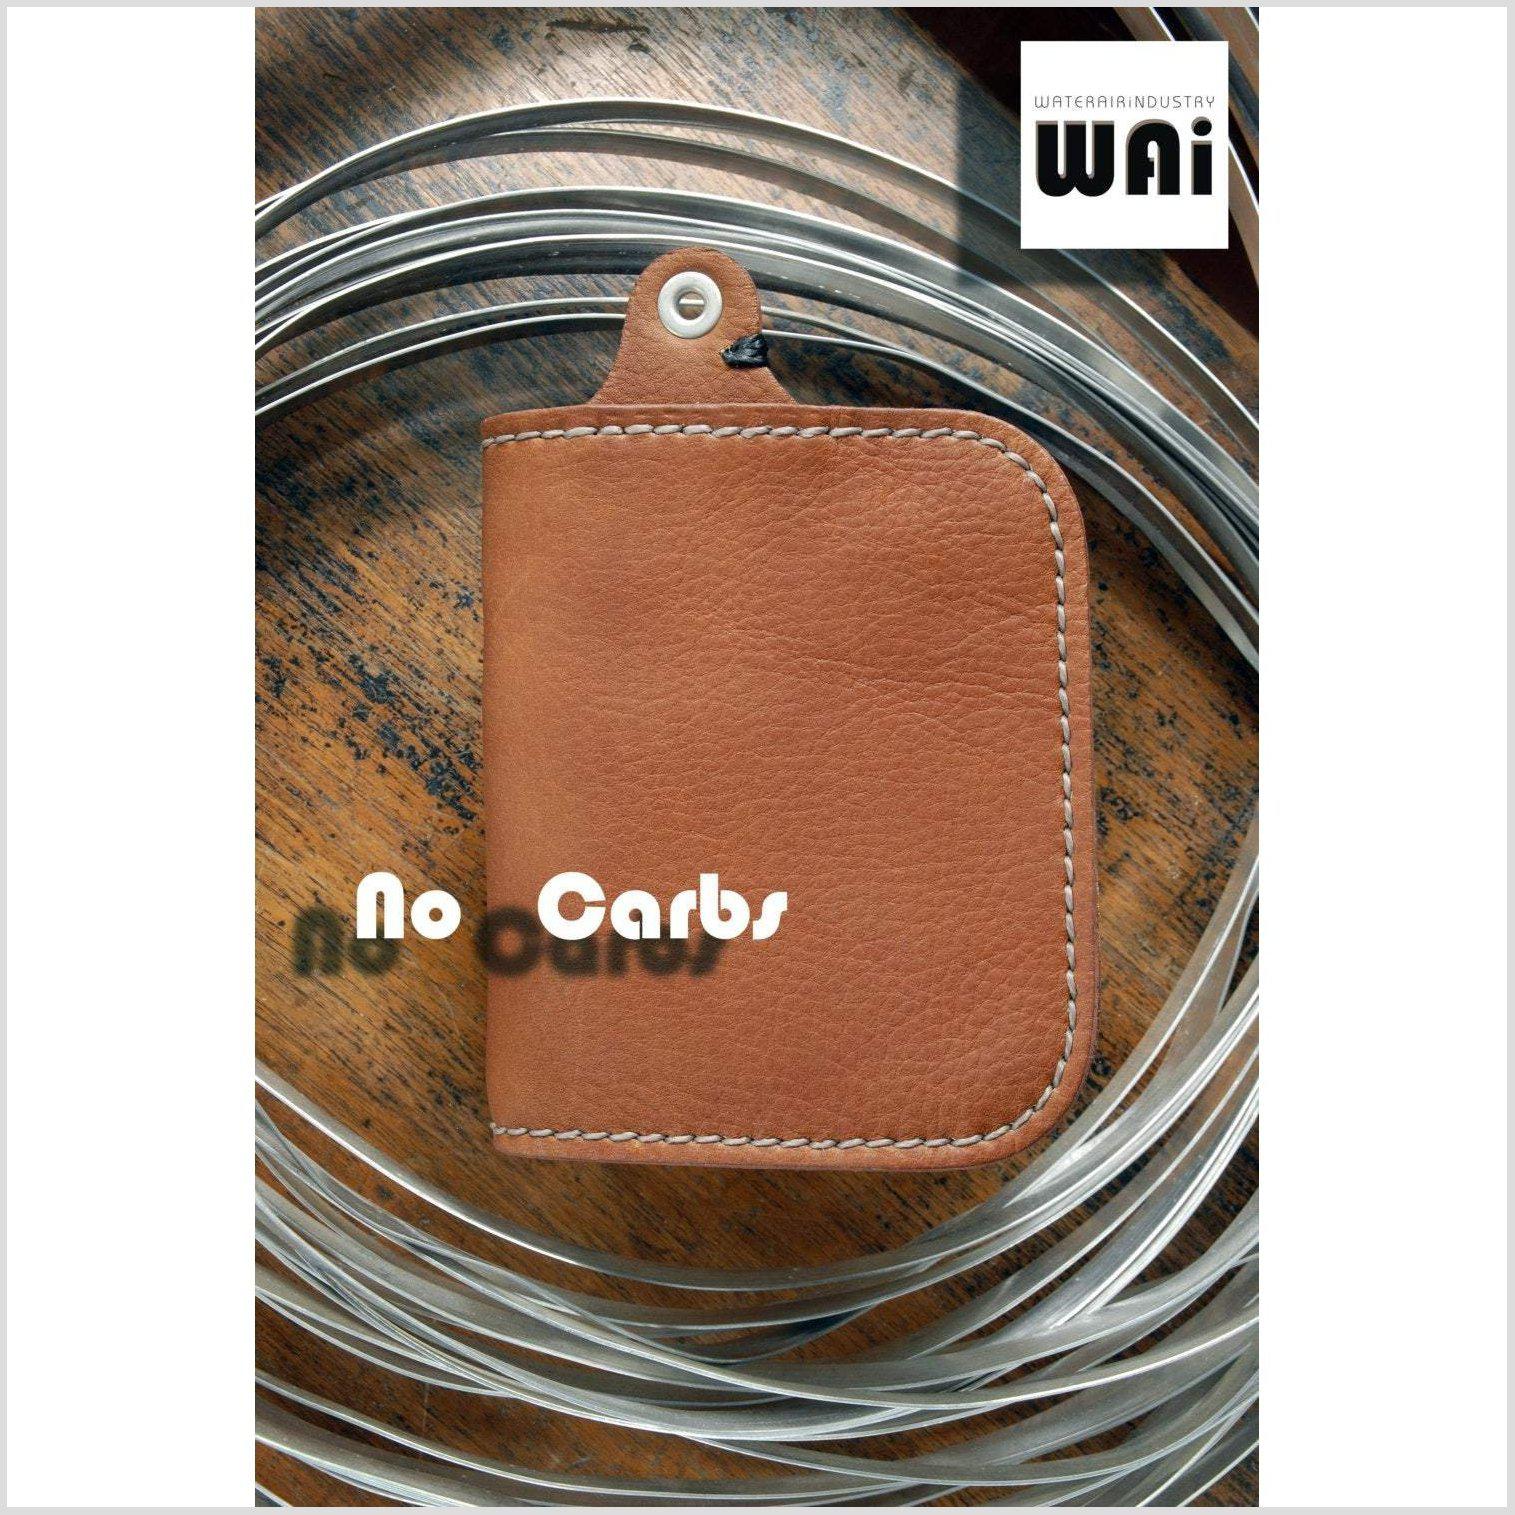 Rich+DESIGNER+Men+Leather+Bifold+Wallet+RFID+Card+Holder+Money+